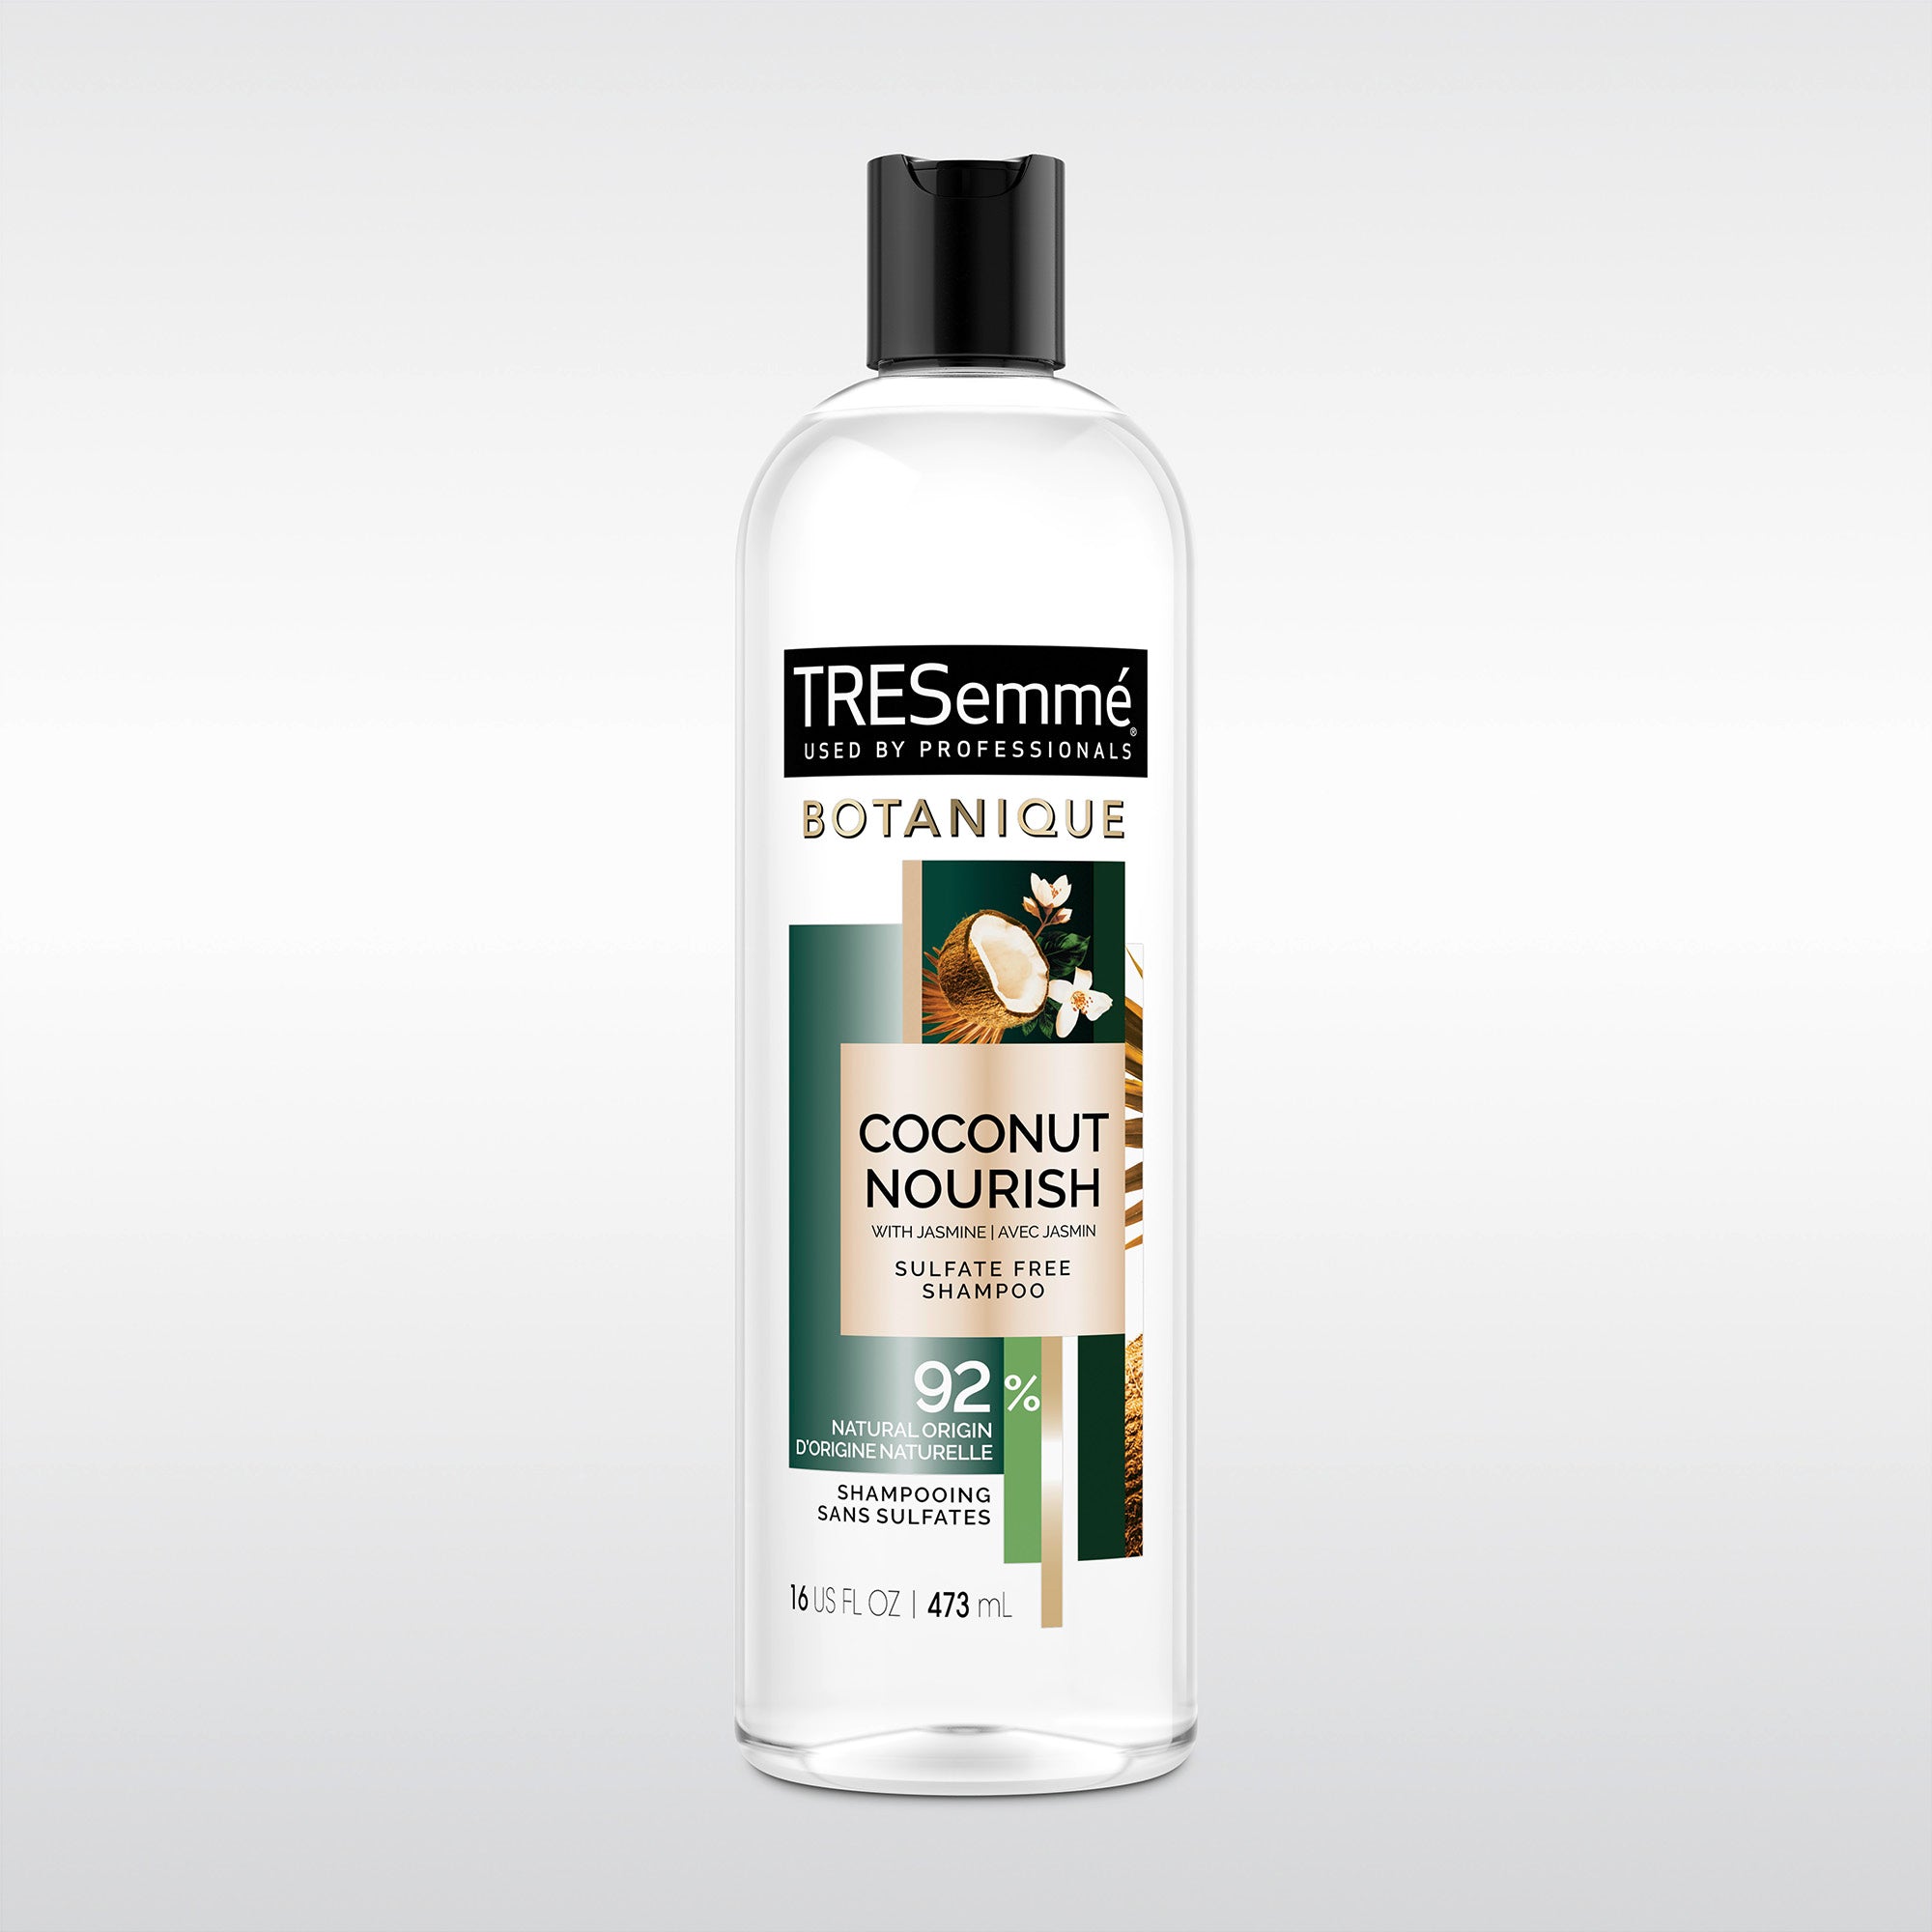 Tresemme Botanique Coconut Nourish Shampoo 473mL